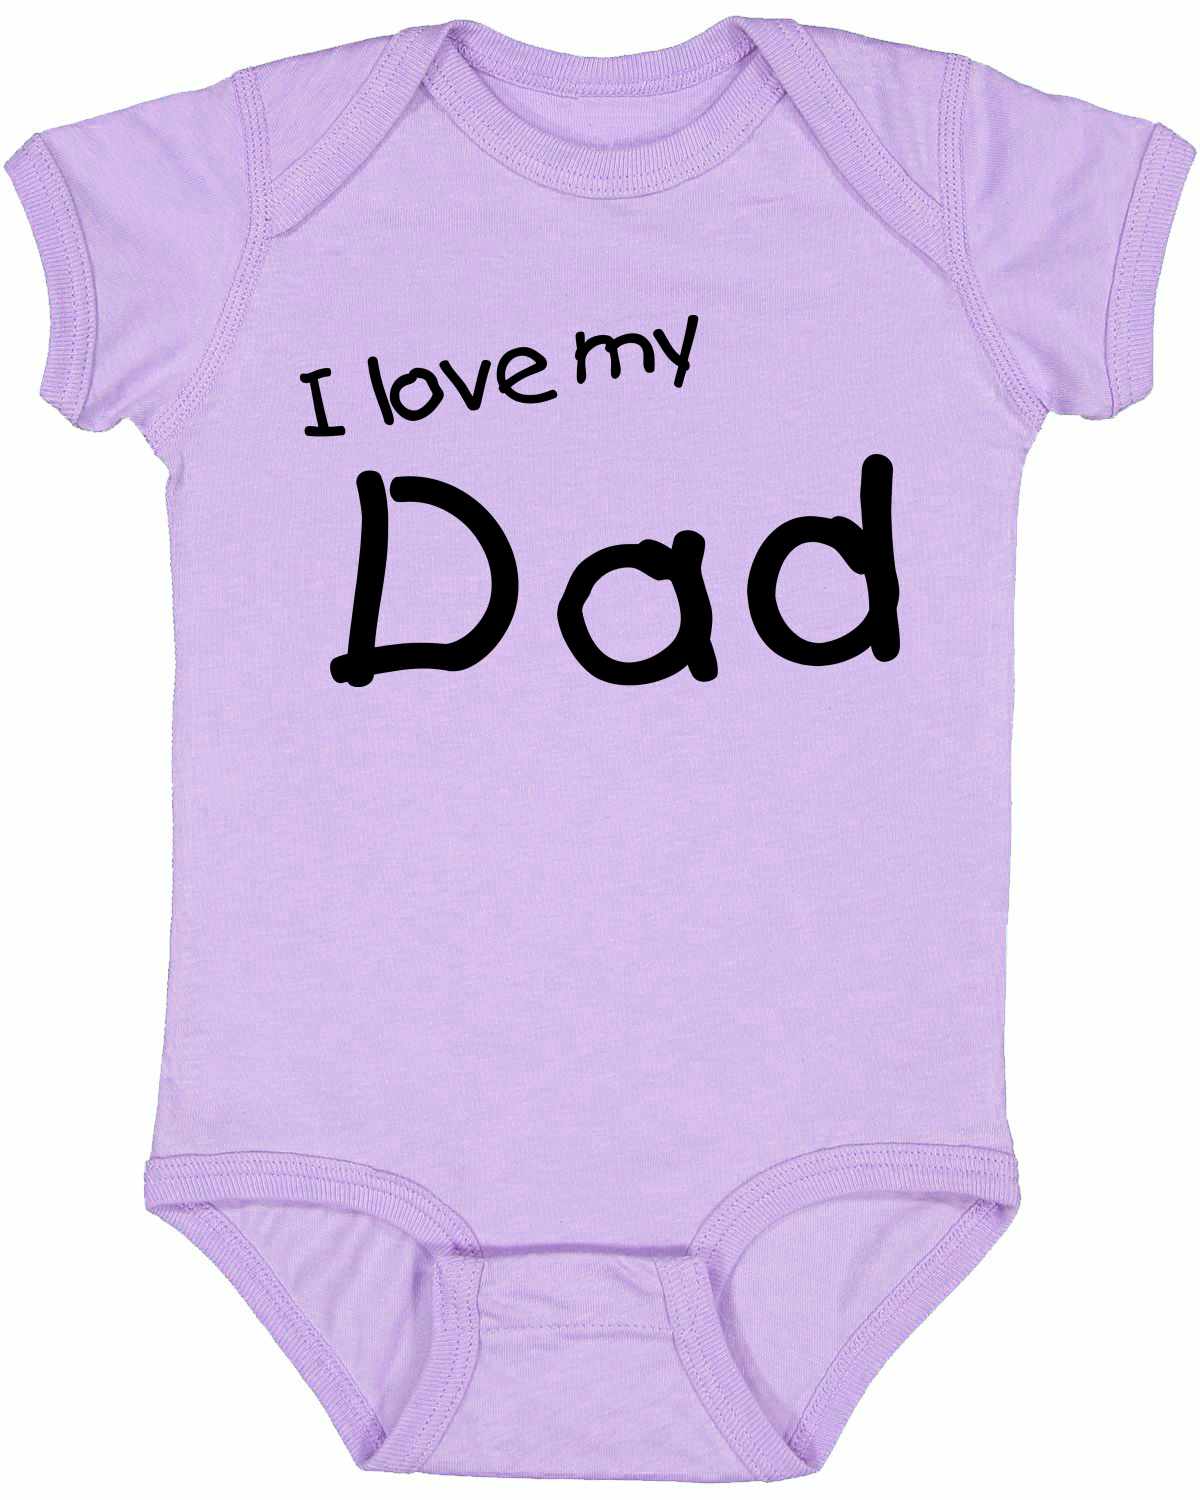 I Love My Dad on Infant BodySuit (#1210-10)